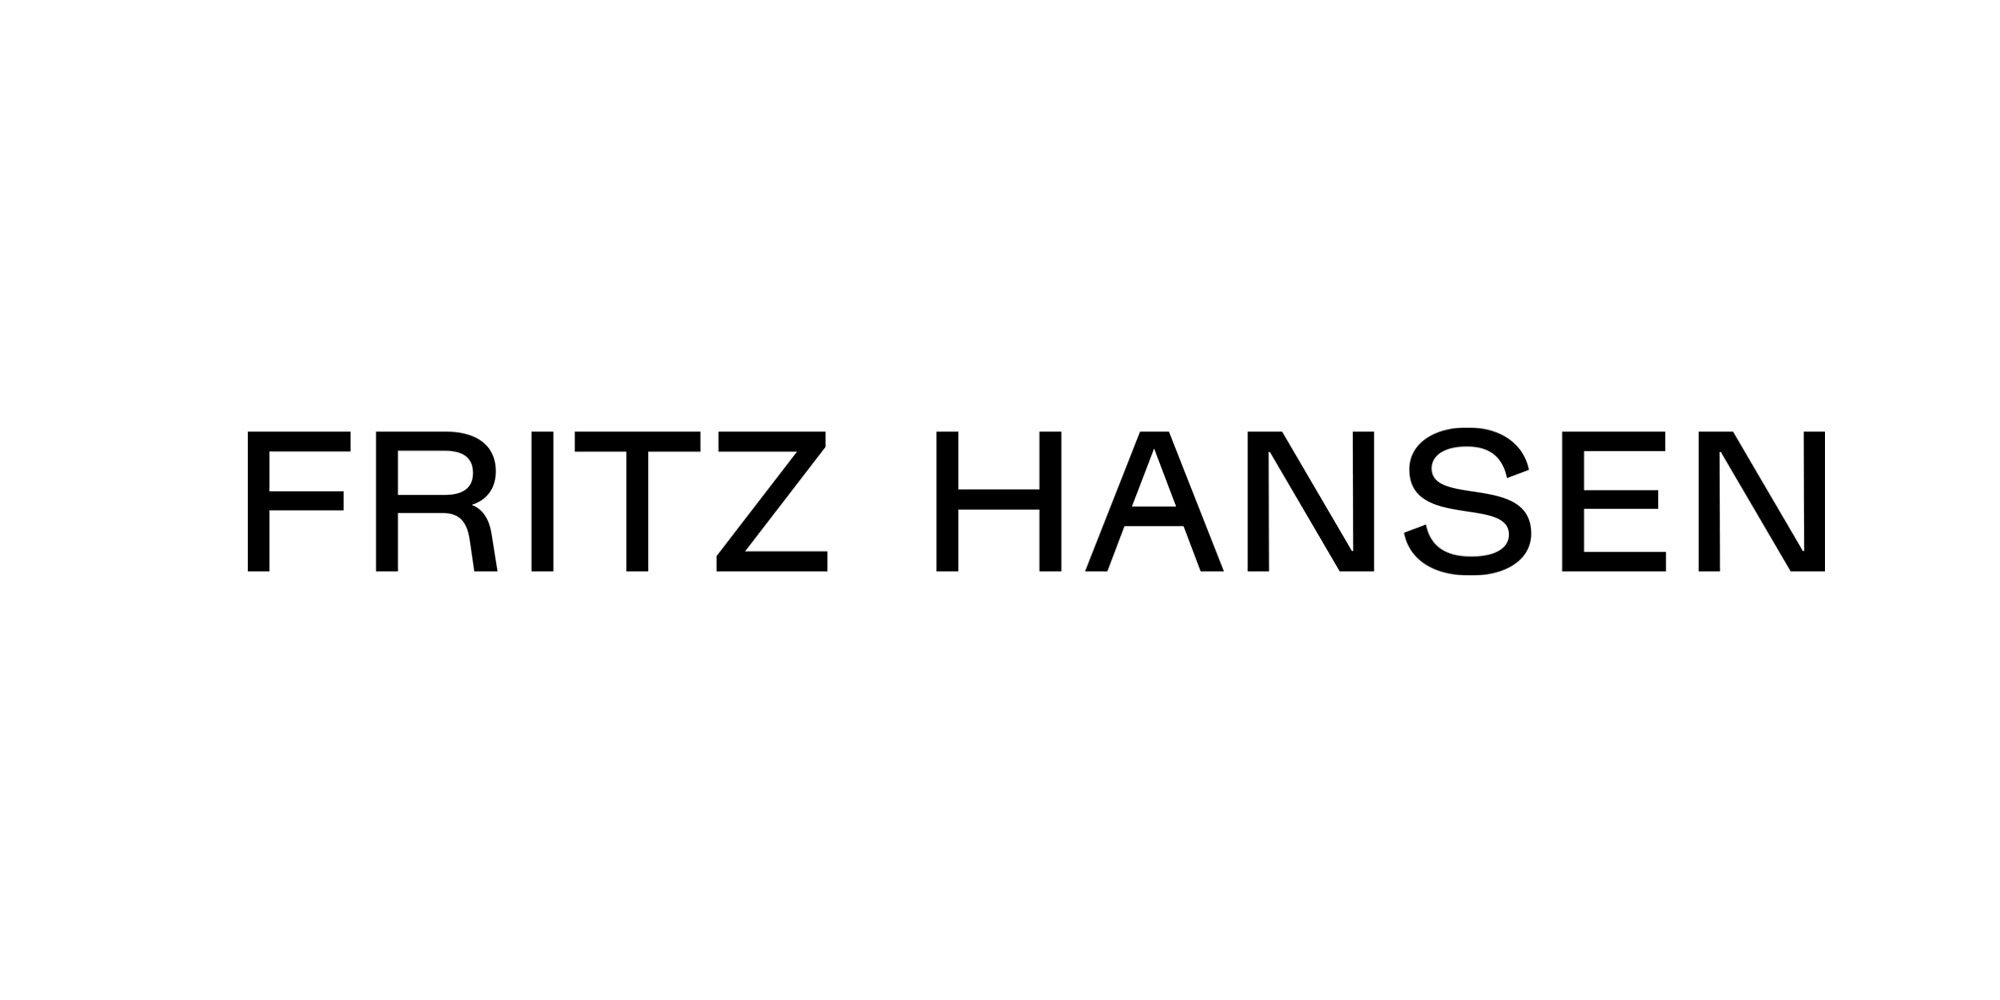 Fritz hansen marque disponible chez Sole e Ombra